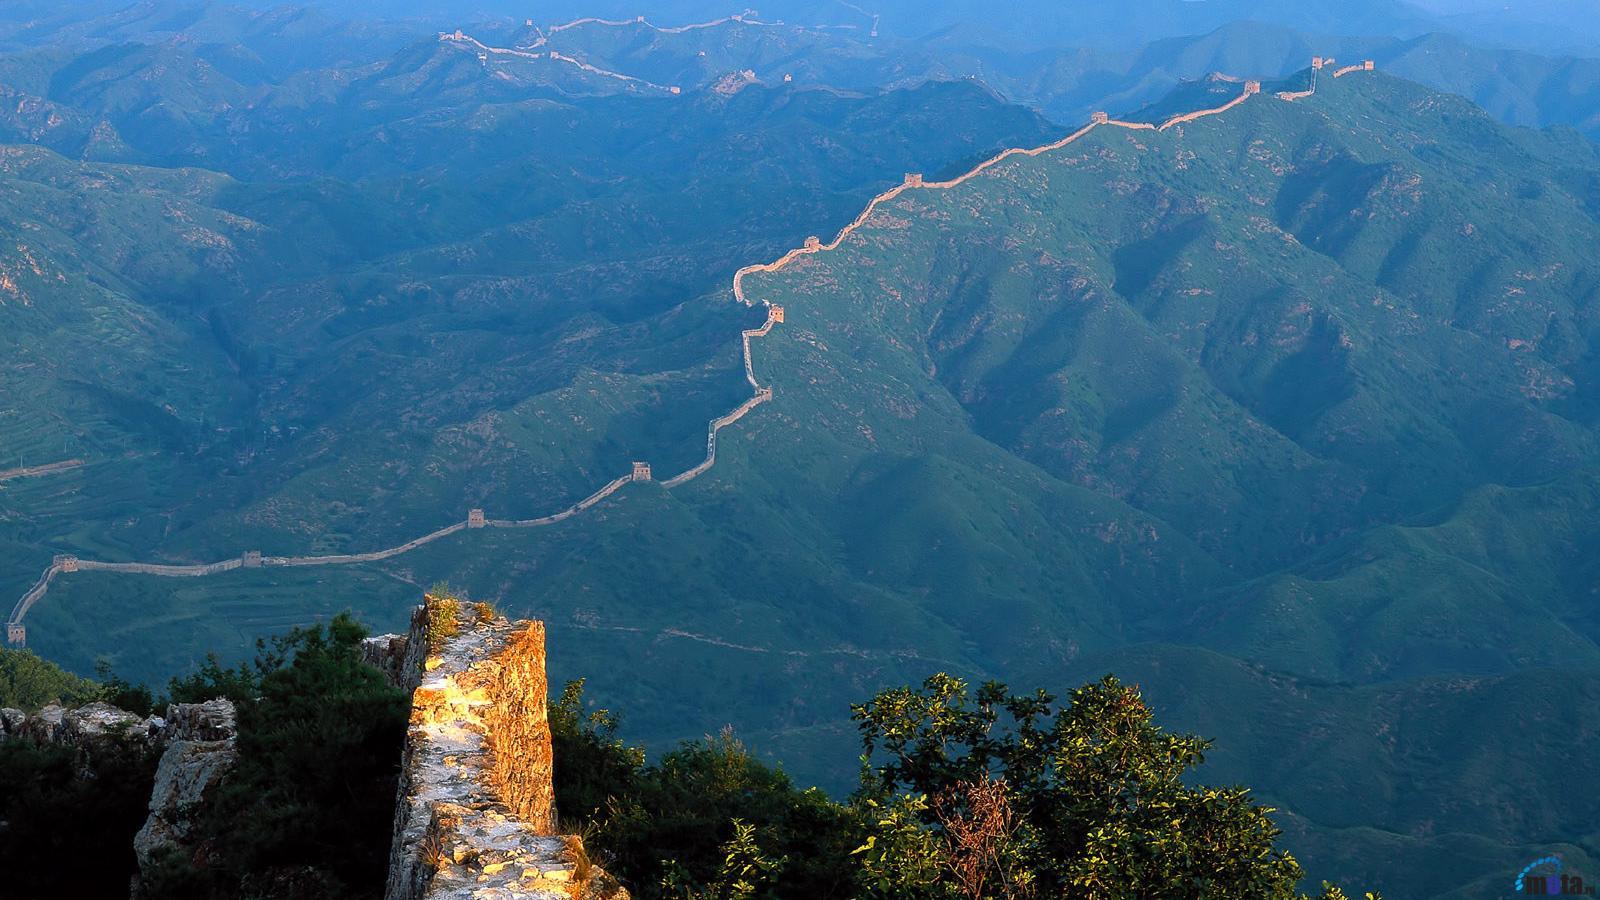 Great Wall of China Map